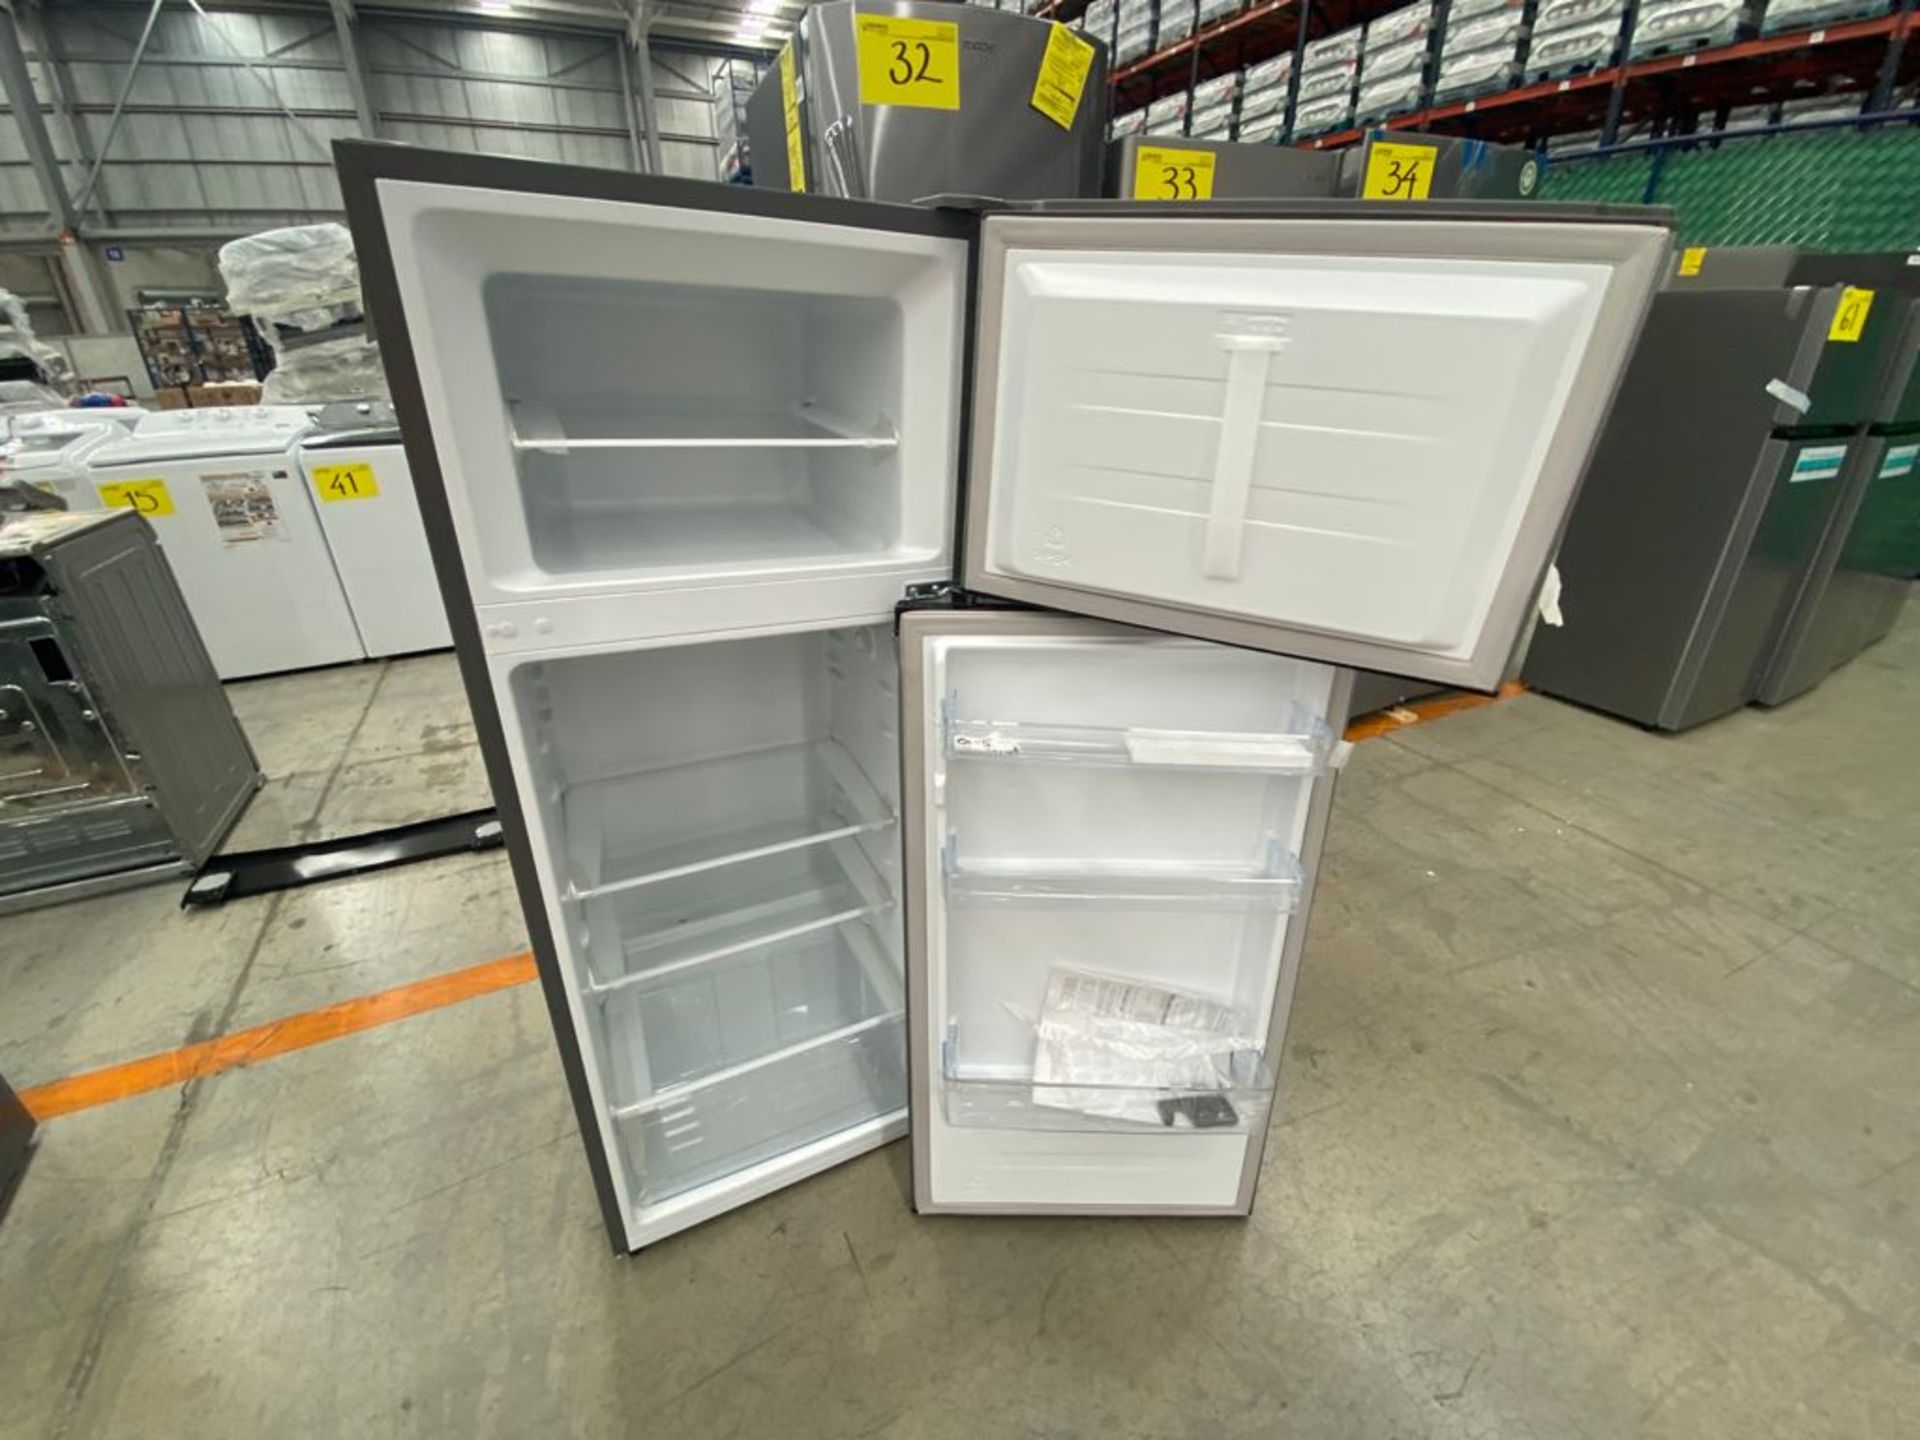 2 Refrigeradores marca Hisense color gris modelo RT80D6AWX - Image 20 of 28